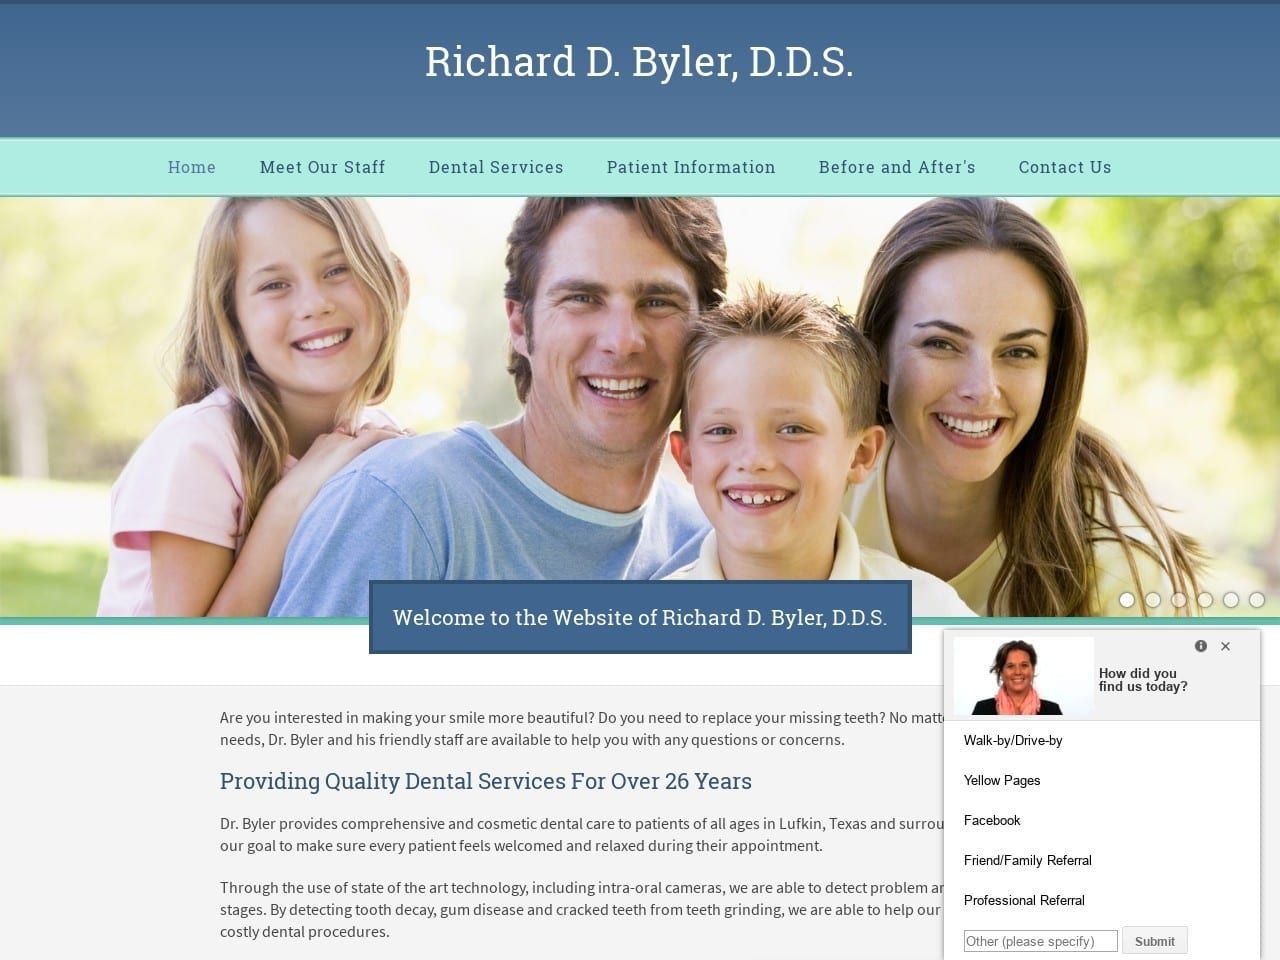 Richard D. Byler DDS FAGD Website Screenshot from richardbylerdental.com